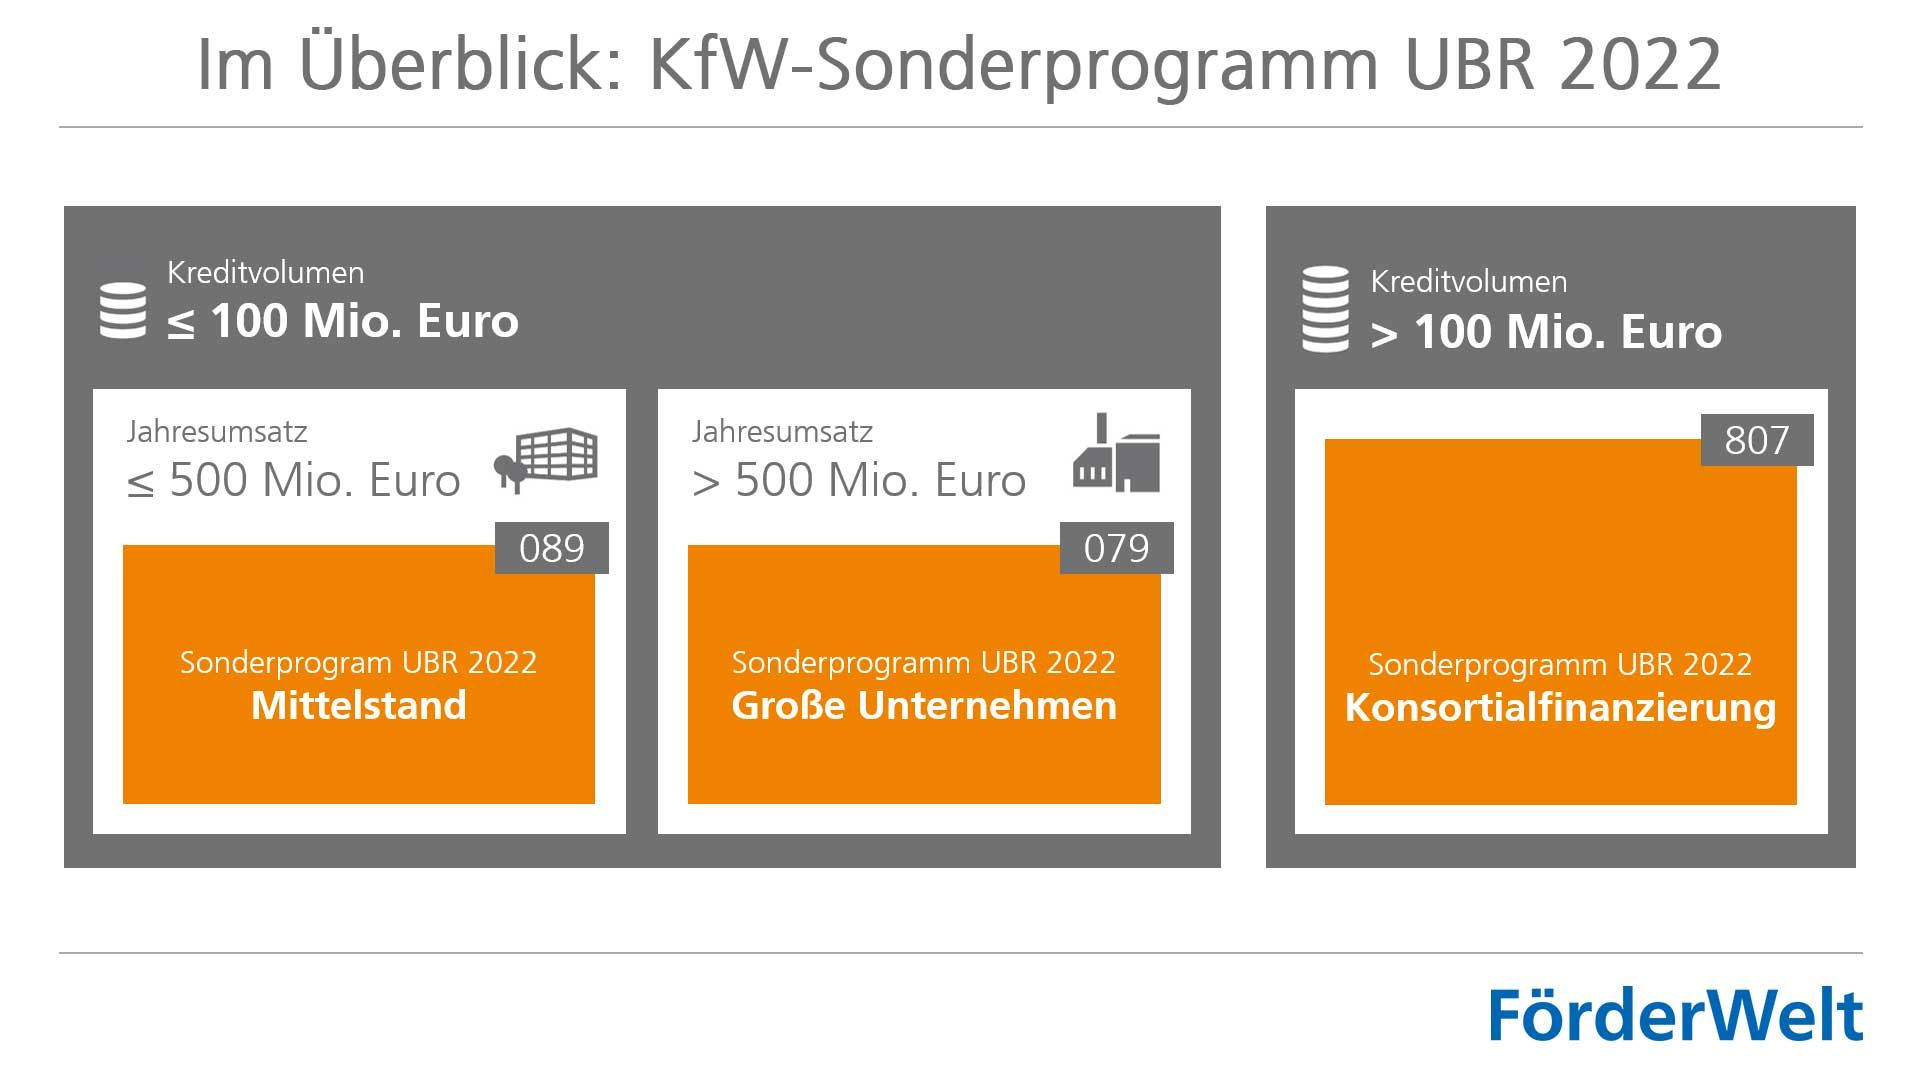 KfW-Sonderprogramm UBR 2022